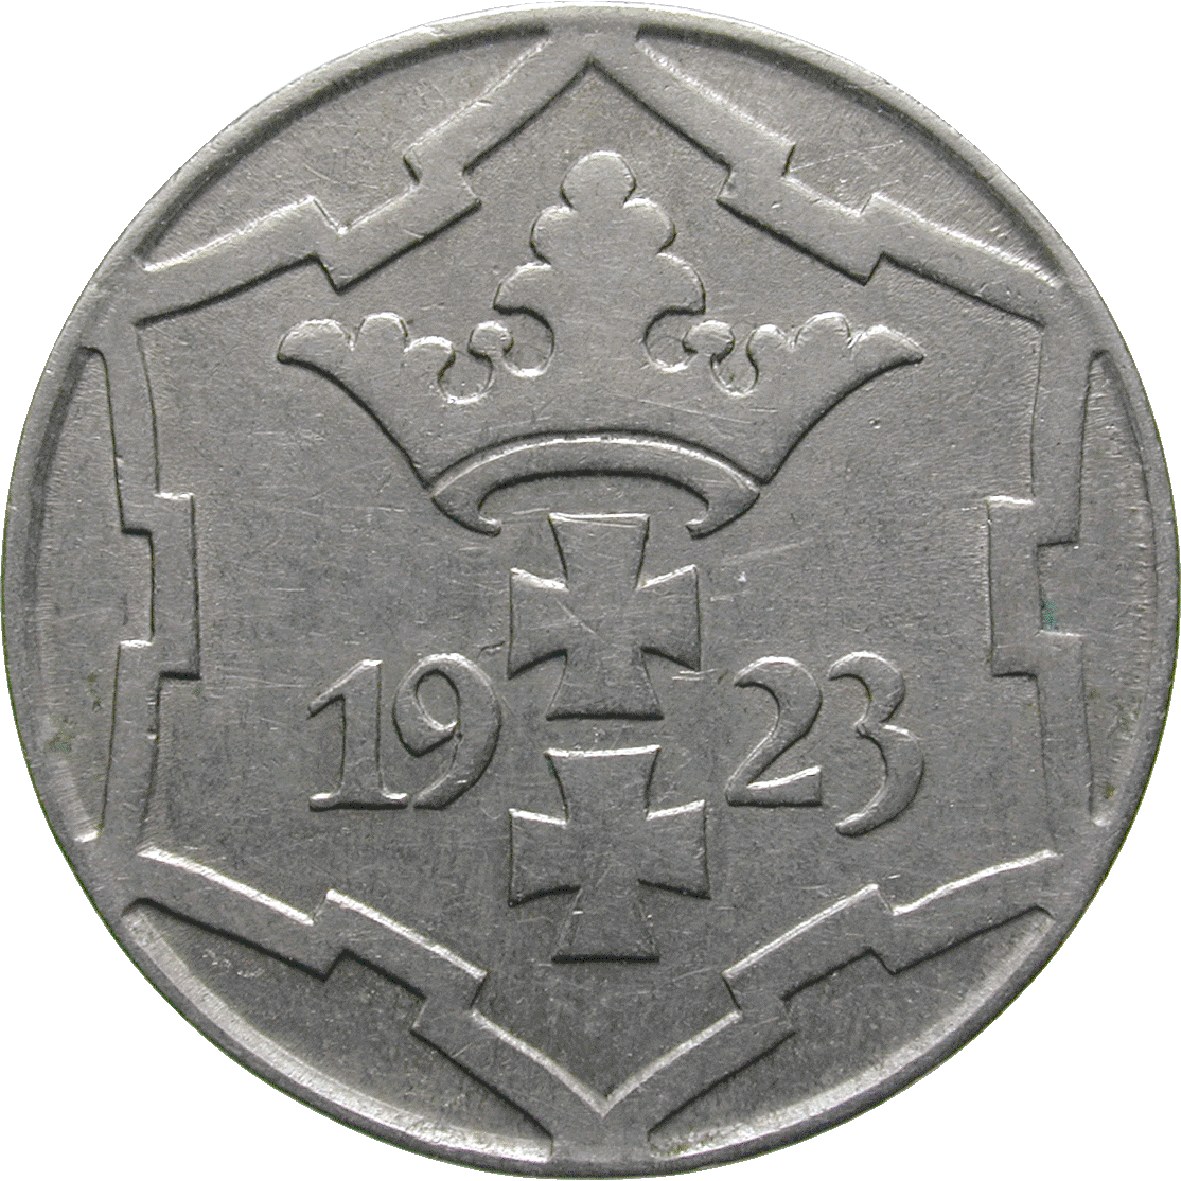 Weimar Republic, Free City of Danzig, 10 Pfennigs 1923 (reverse)